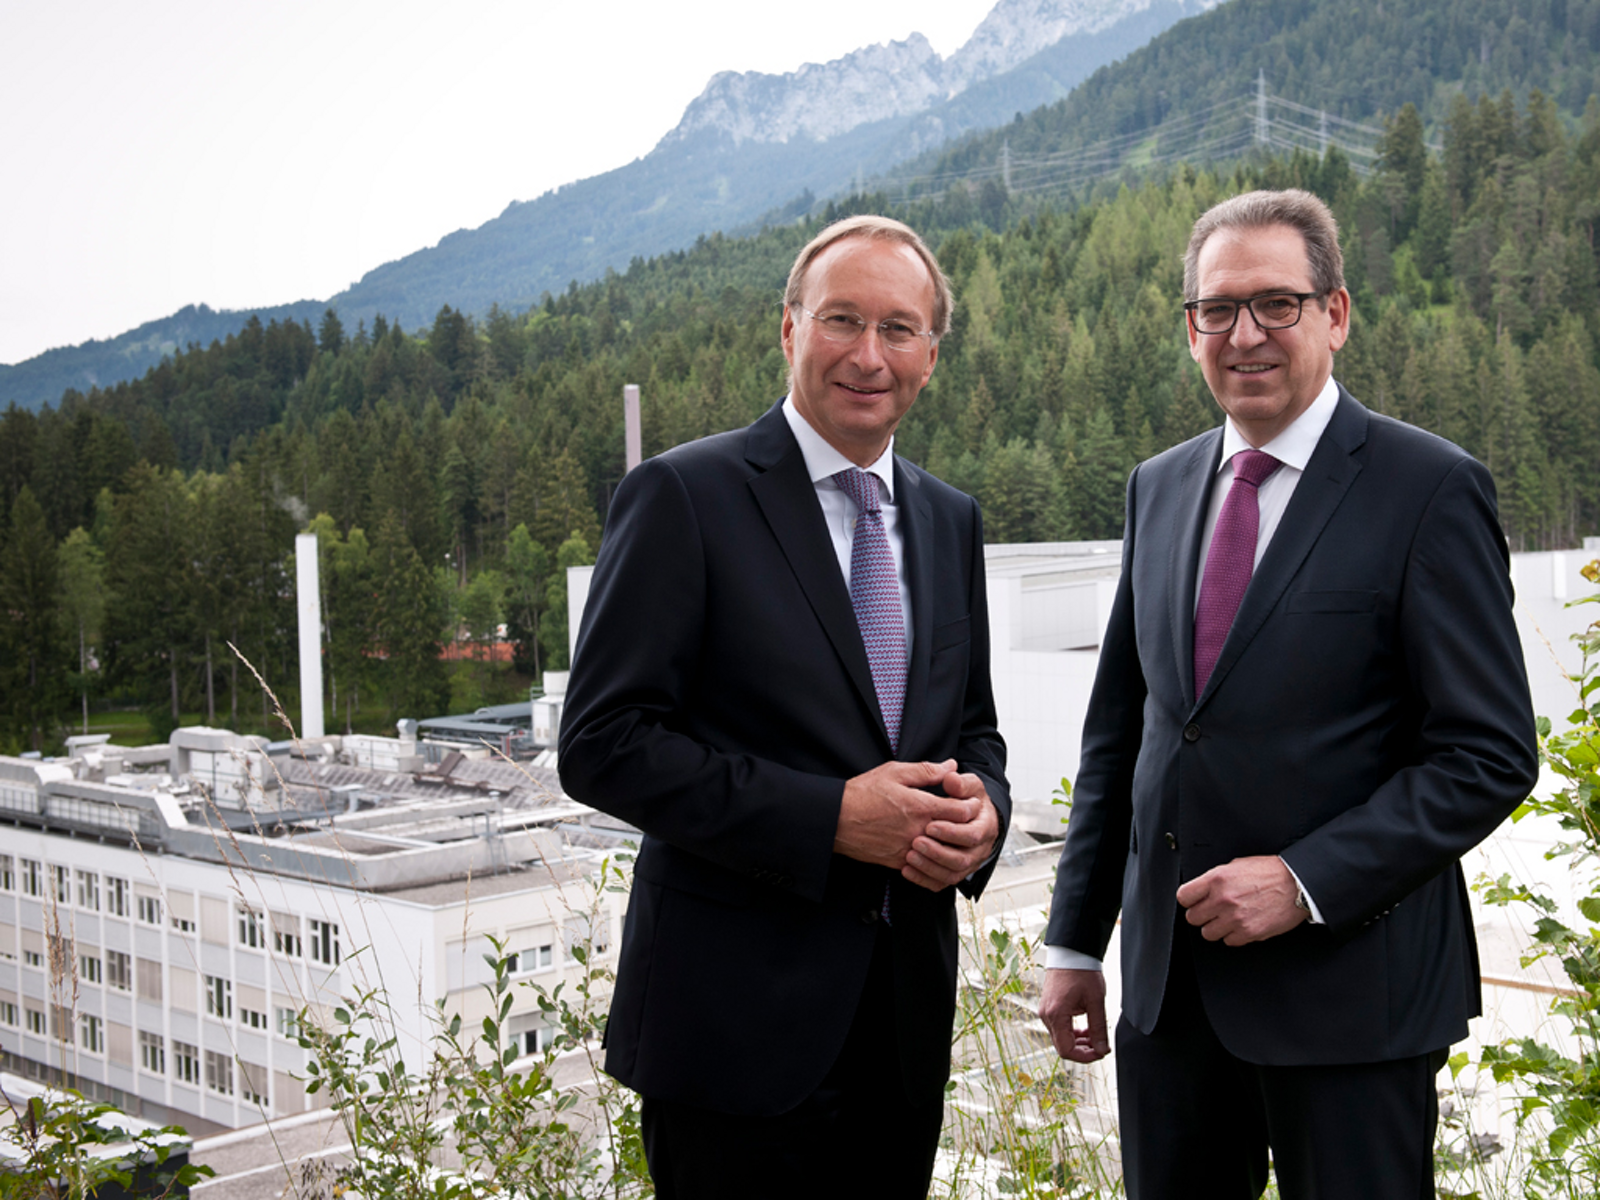 Plansee Group’s Executive Board Bernhard Schretter (left) and Karlheinz Wex